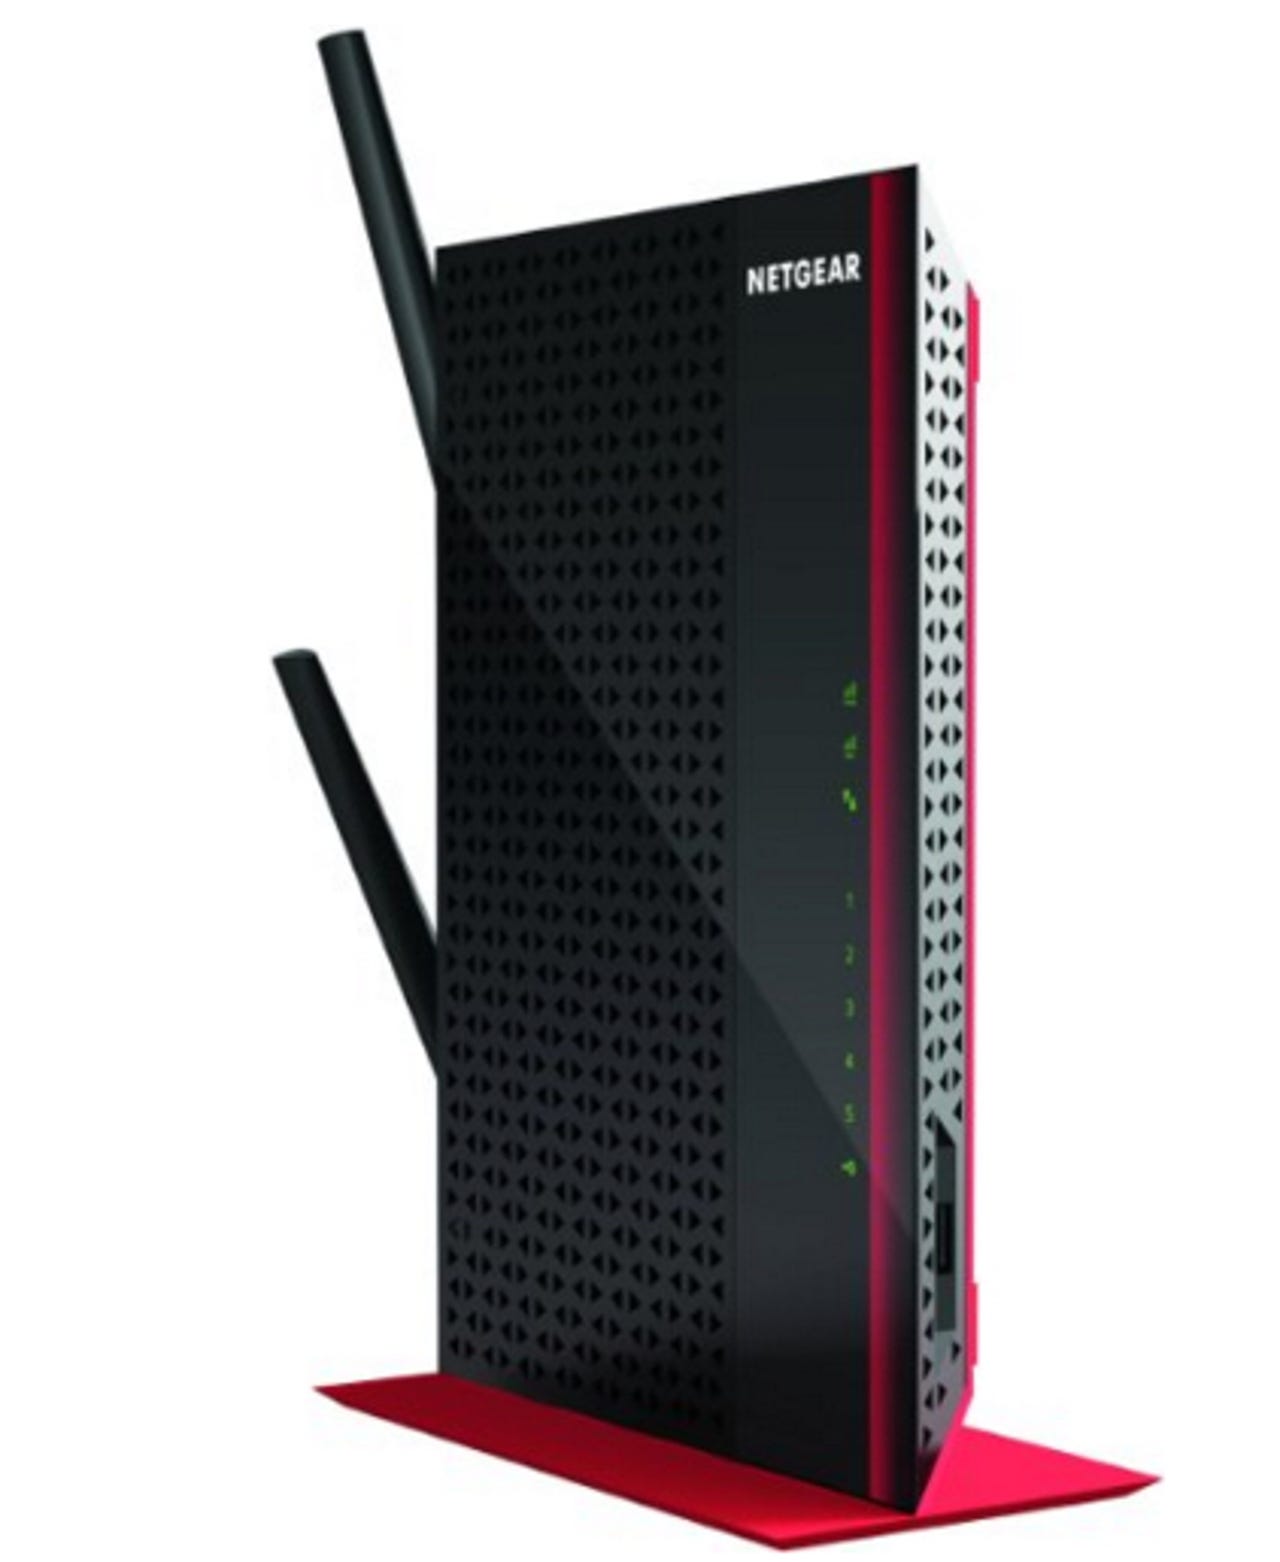 amazon-com-netgear-ac1200-high-power-700mw-dual-band-wi-fi-range-extender-desktop-with-5-ports-ex6200-computers-accesso-2015-12-13-16-07-22.jpg